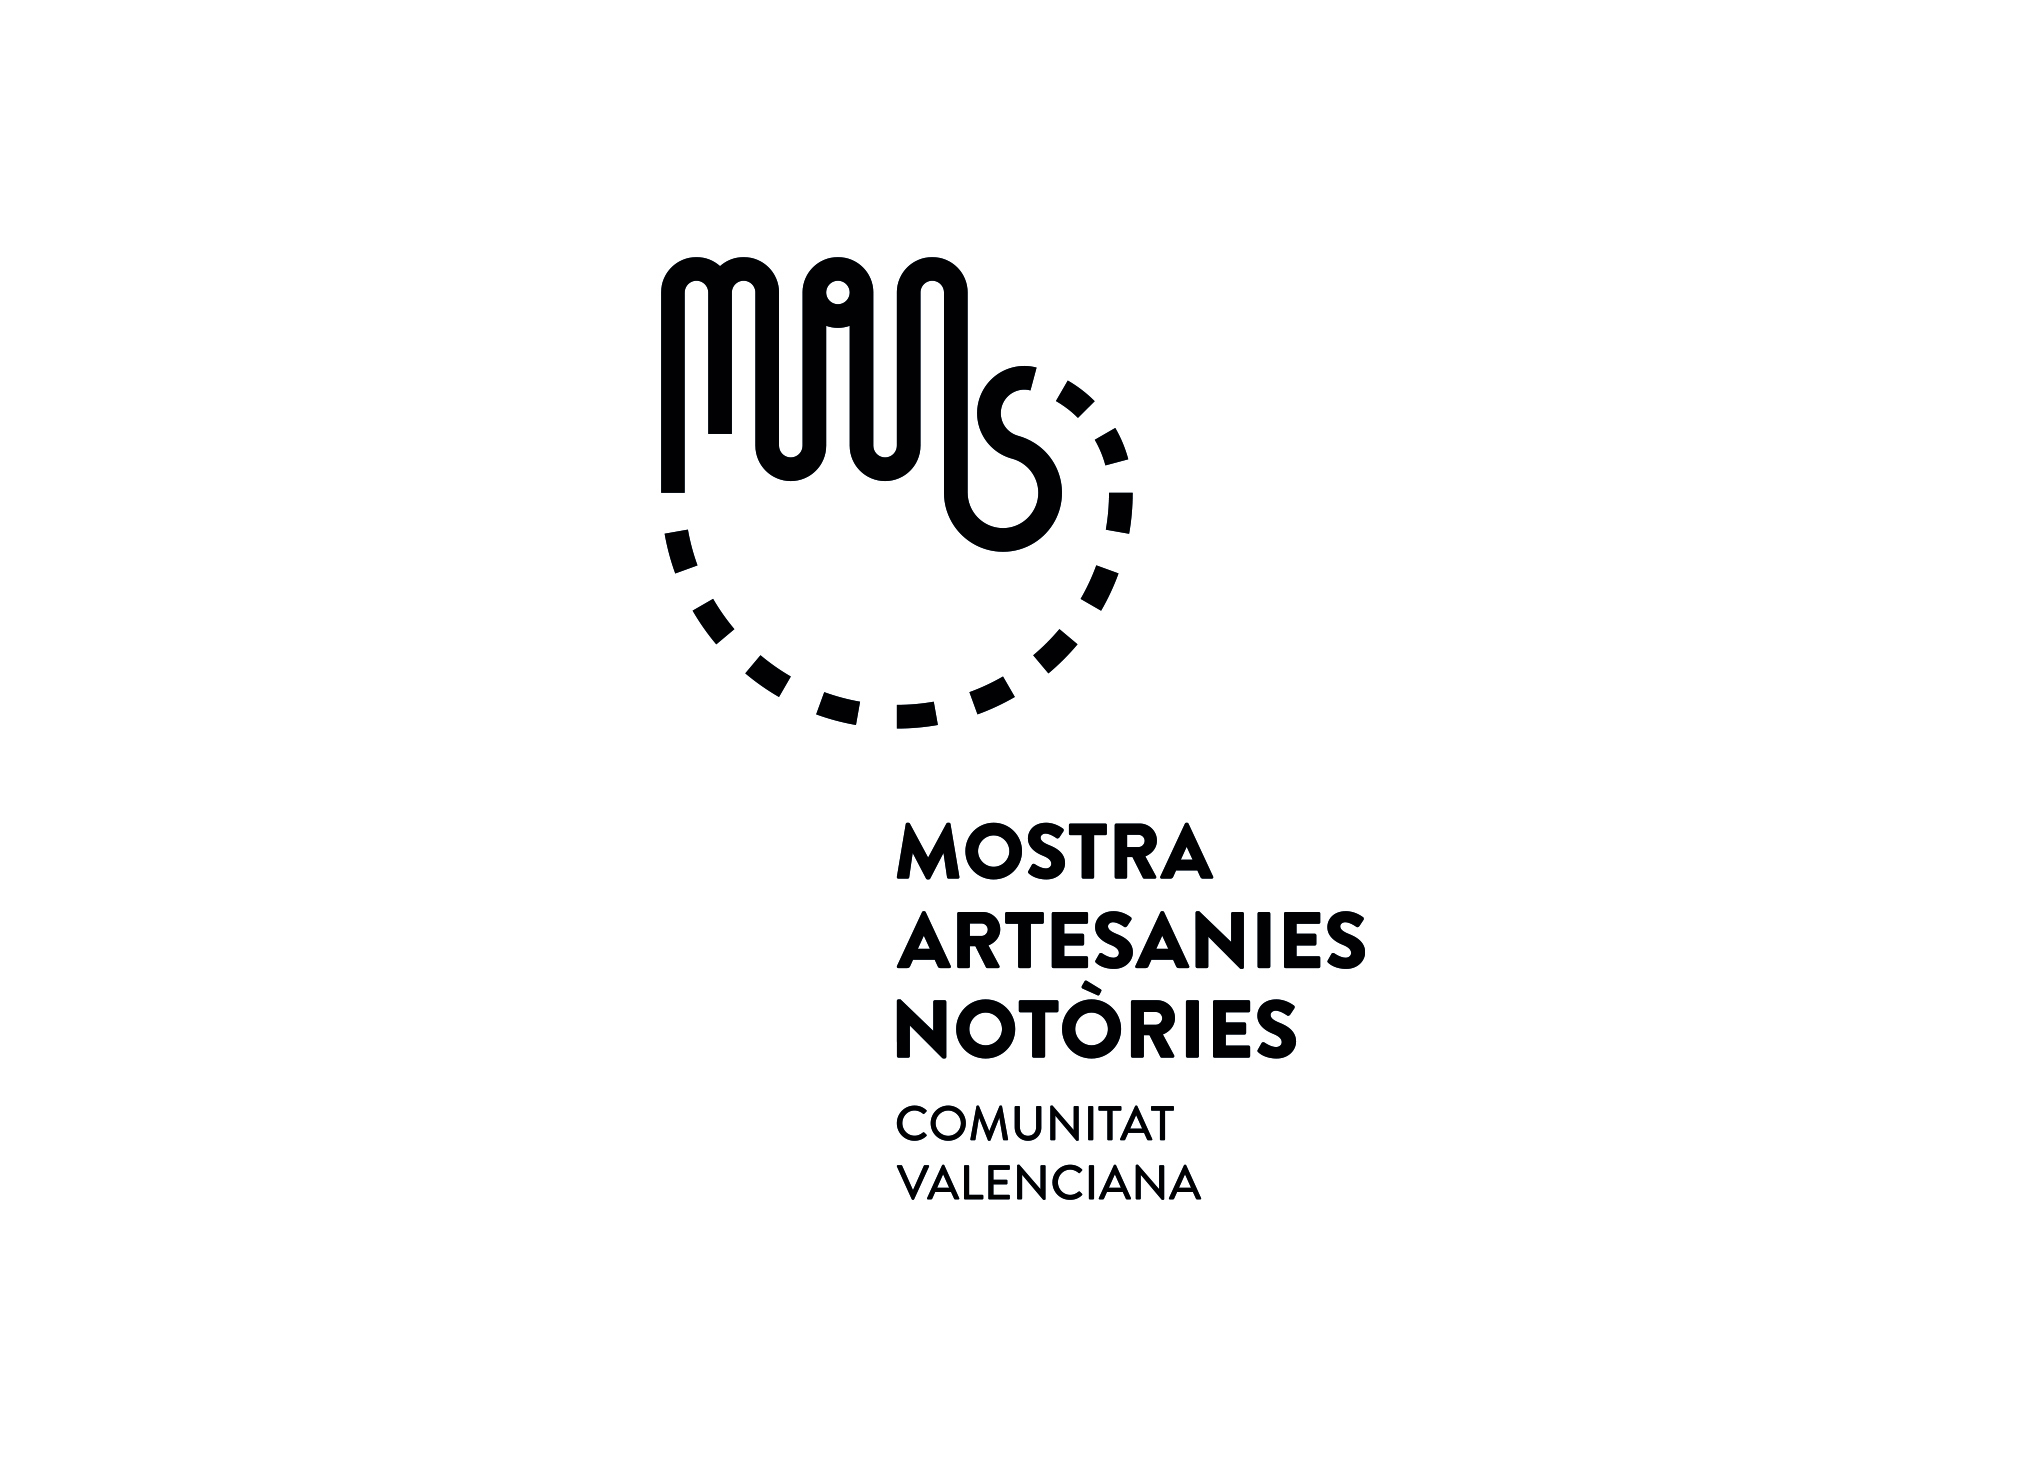 MANS_Mostra de Artesanies Notòries de la Comunitat Valenciana by CREATIAS ESTUDIO - Creative Work